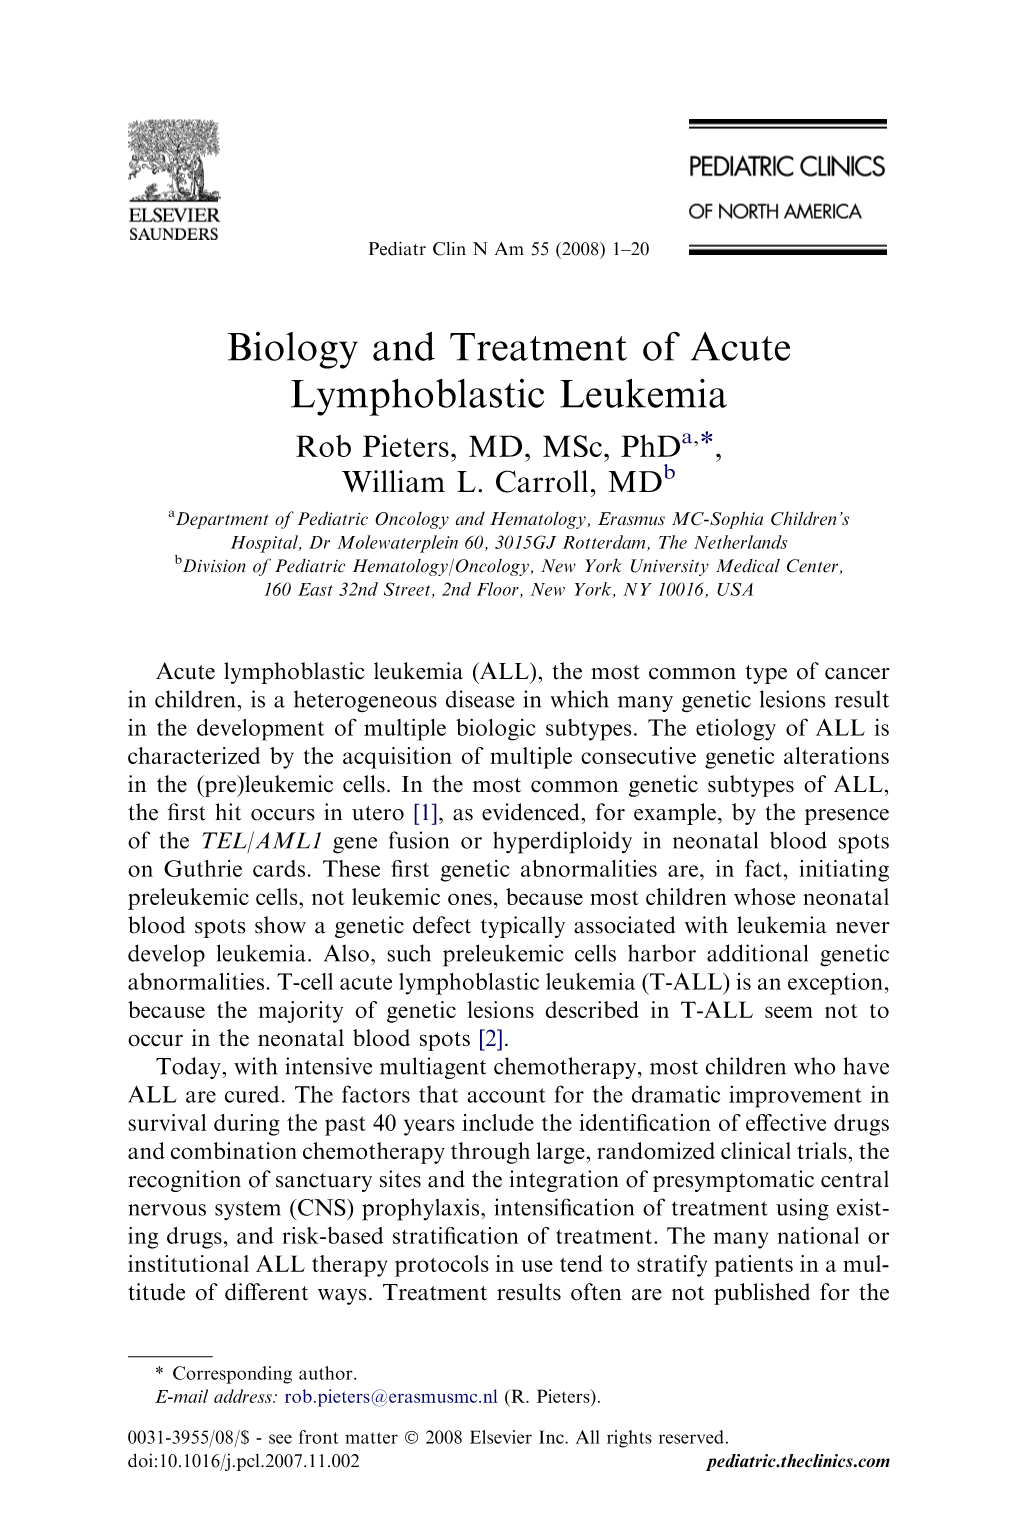 Biology and Treatment of Acute Lymphoblastic Leukemia Rob Pieters, MD, Msc, Phda,*, William L